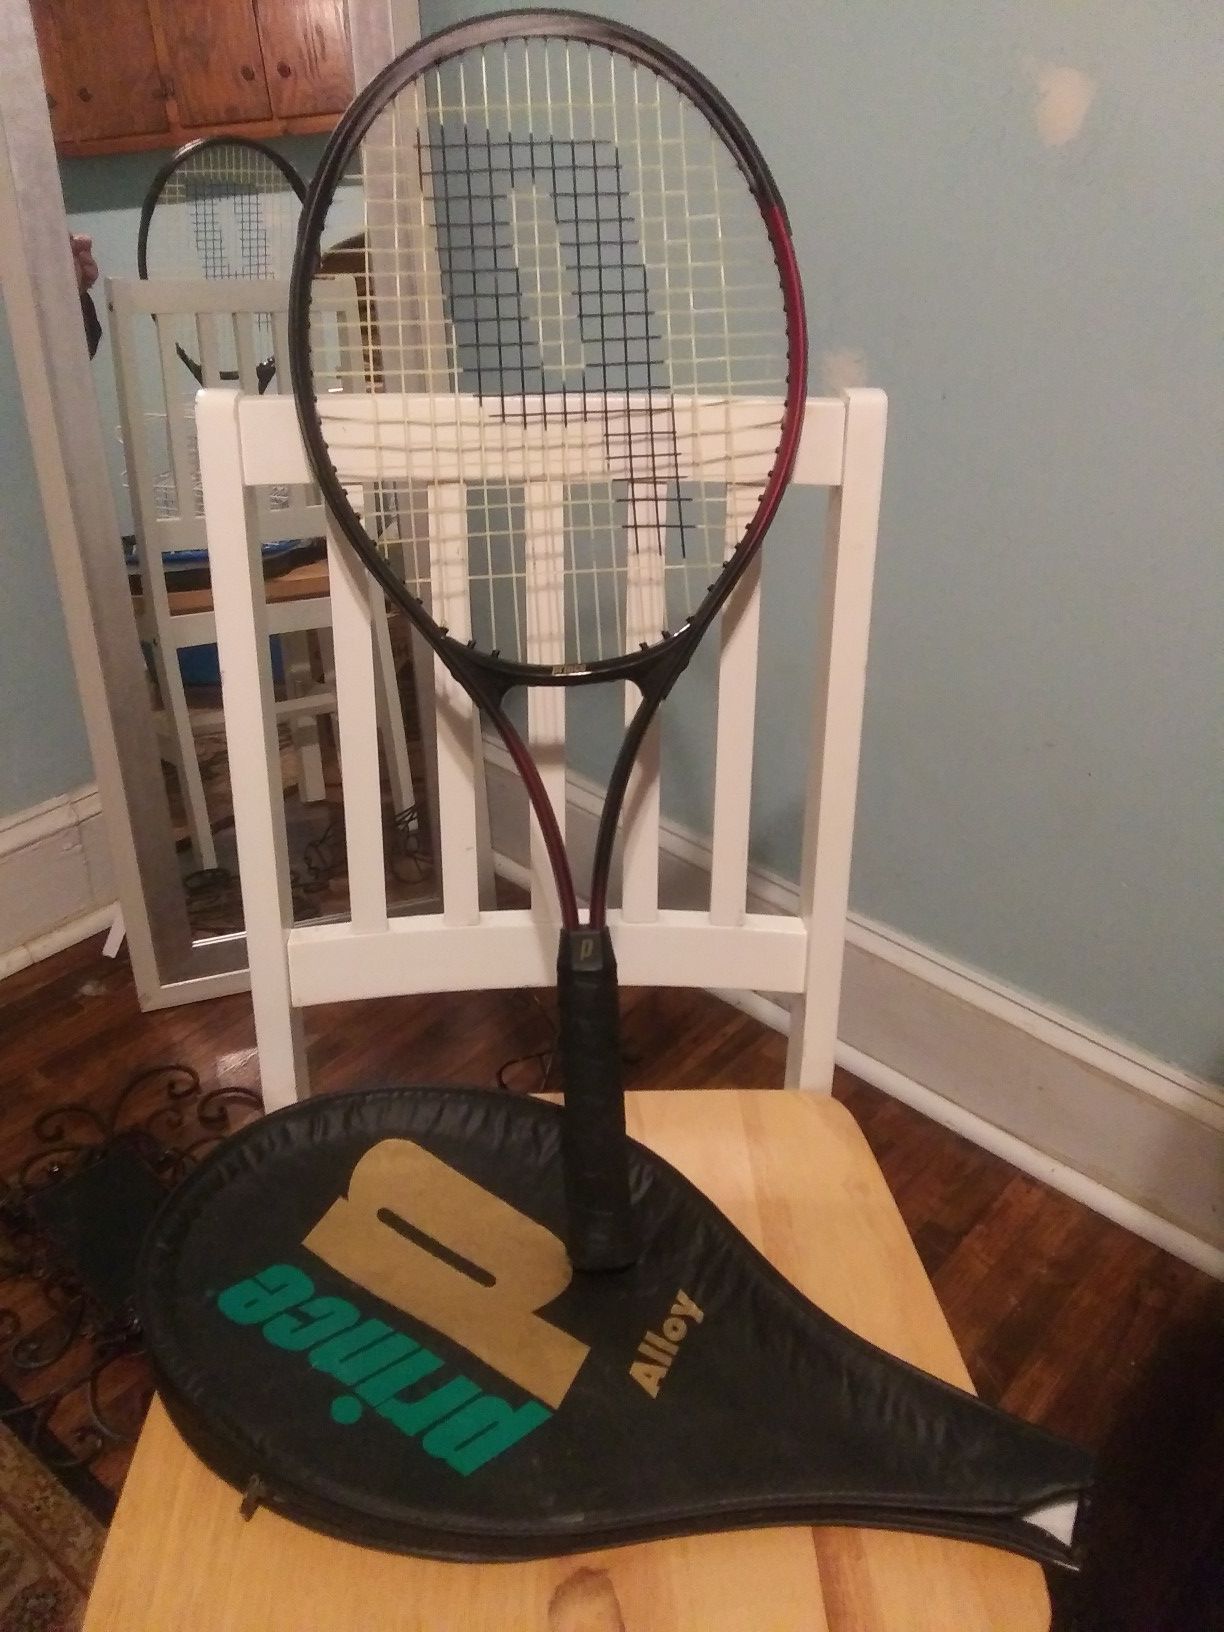 Prince vintage tennis rackets